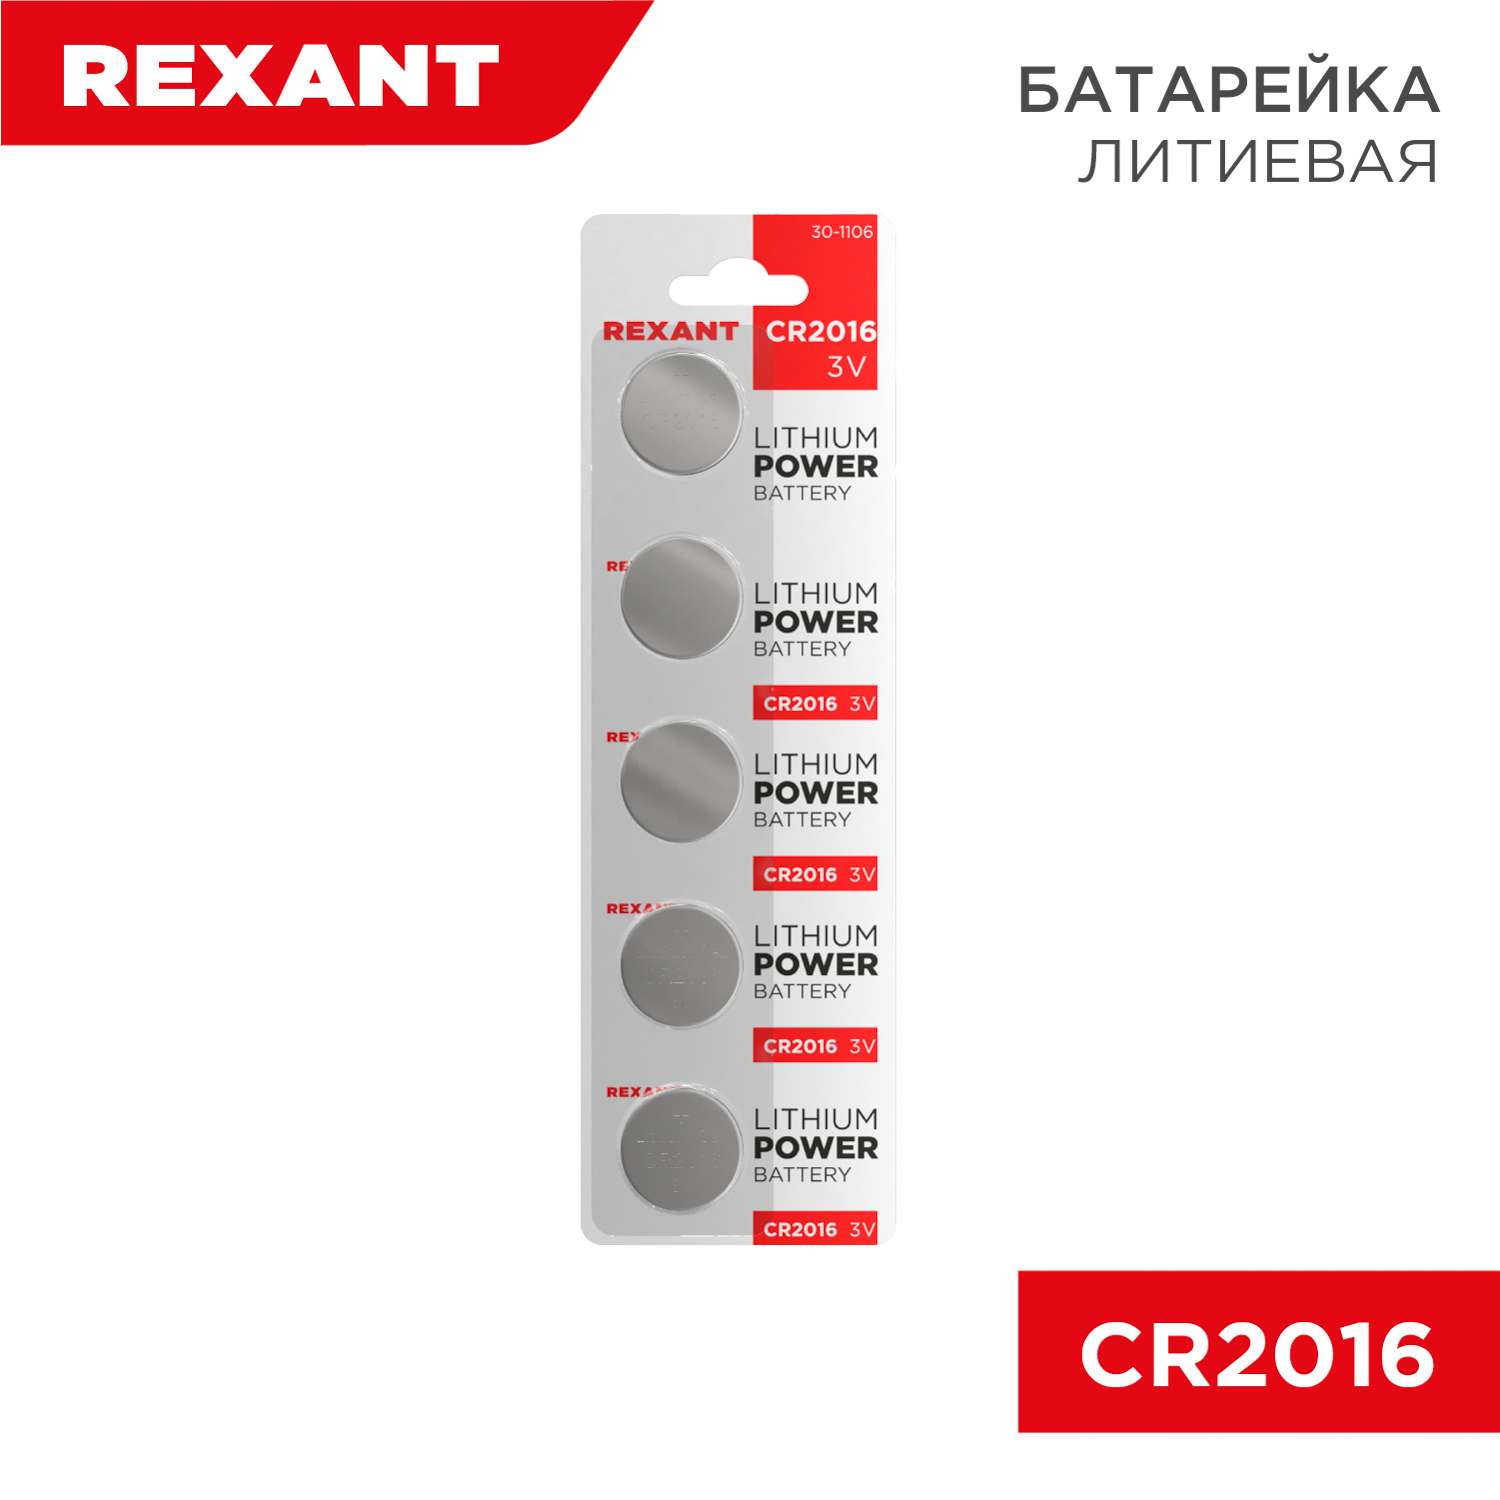 Батарейка REXANT литиевая CR2016 3В 5 штук - фото 1